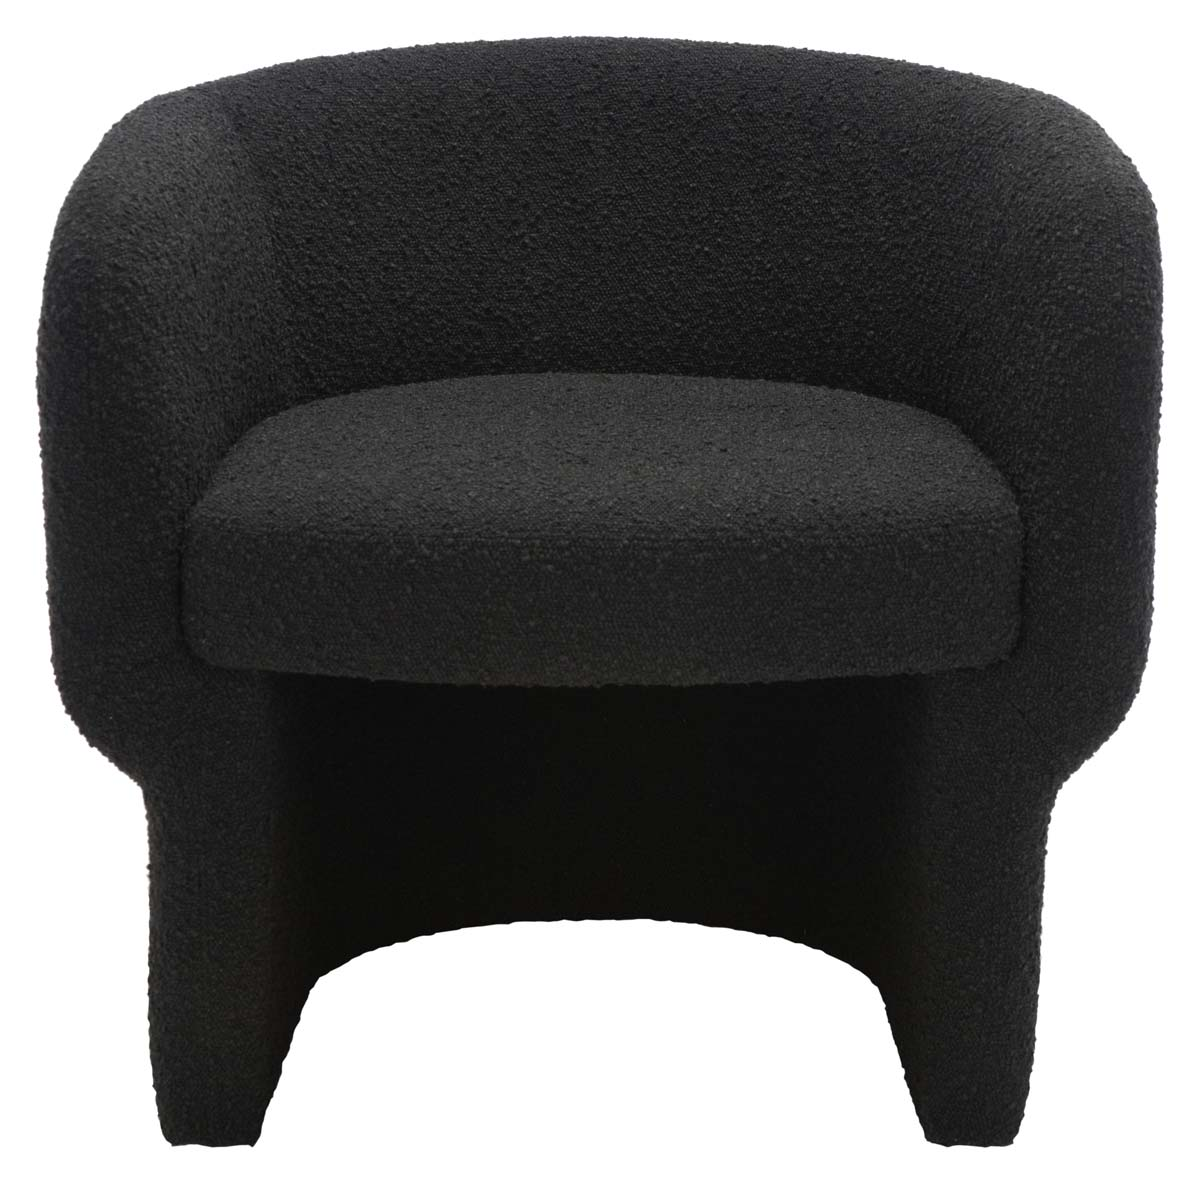 Safavieh Couture Kellyanne Boucle Modern Accent Chair - Black